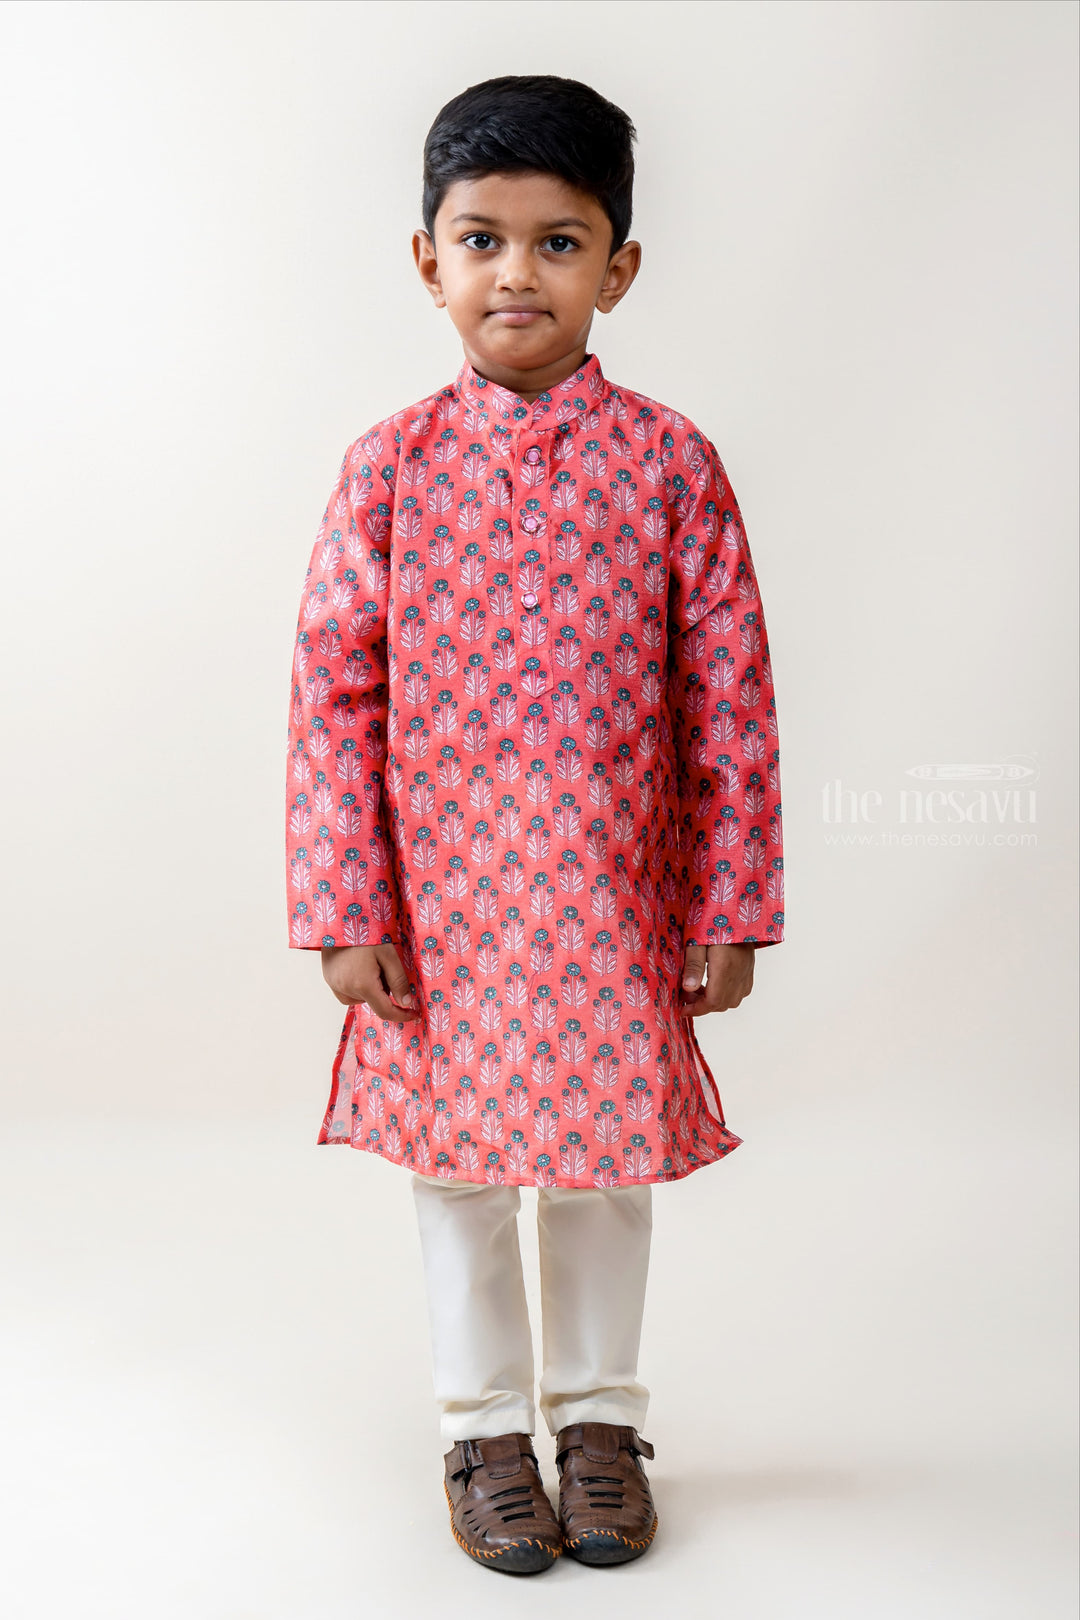 The Nesavu Ethnic Sets Flower And Leaf - Blended Cotton Red Shirt And Cotton Pant For Little Boys psr silks Nesavu 14 (6M) / deeppink BES225A